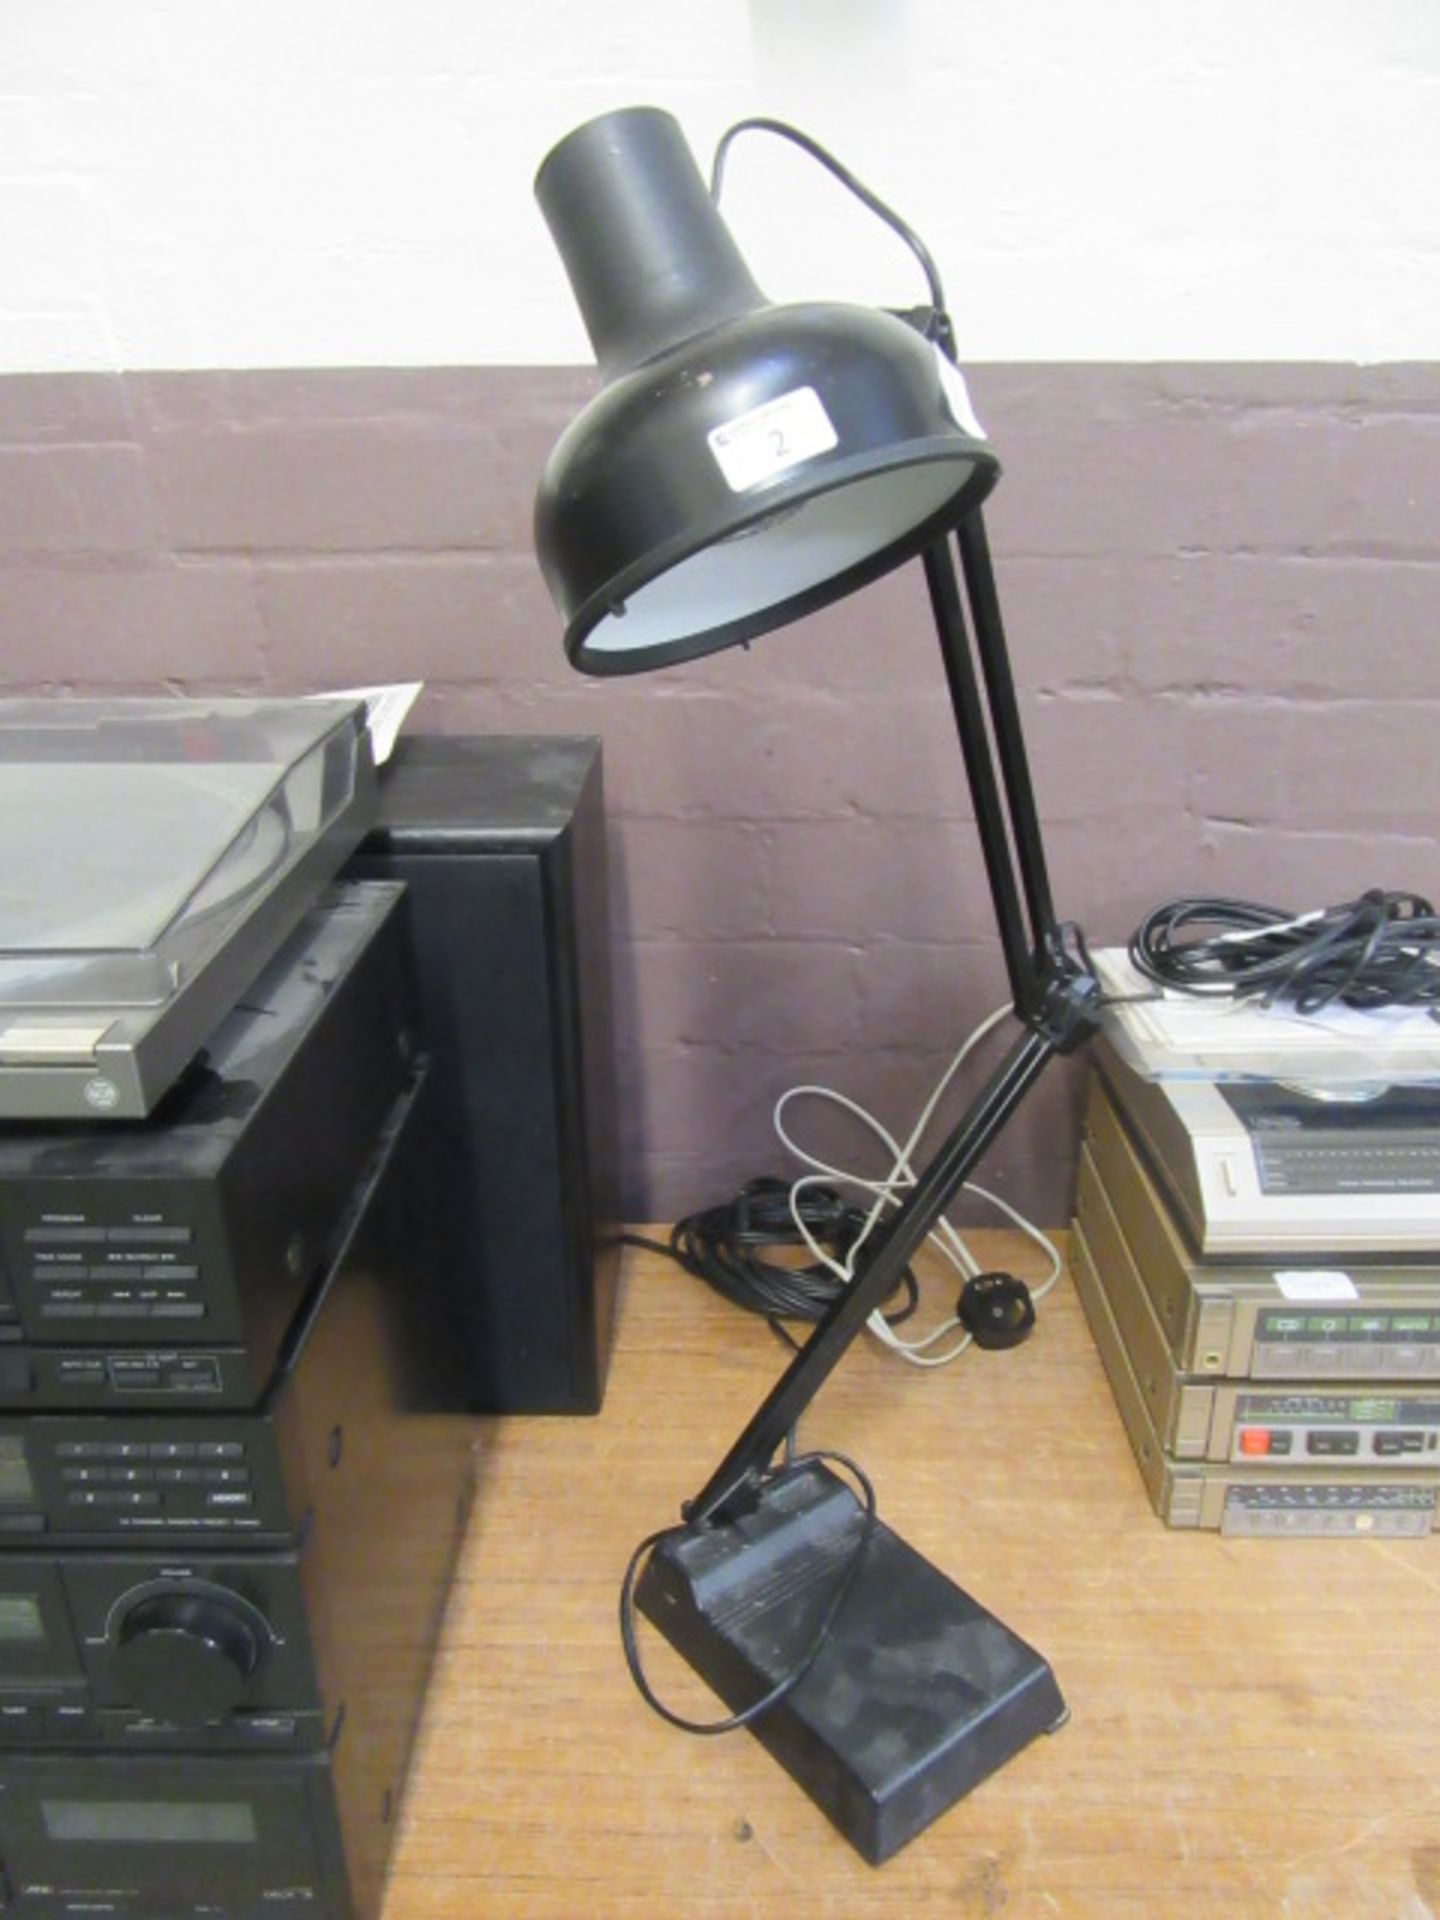 A black angle-poise style lamp